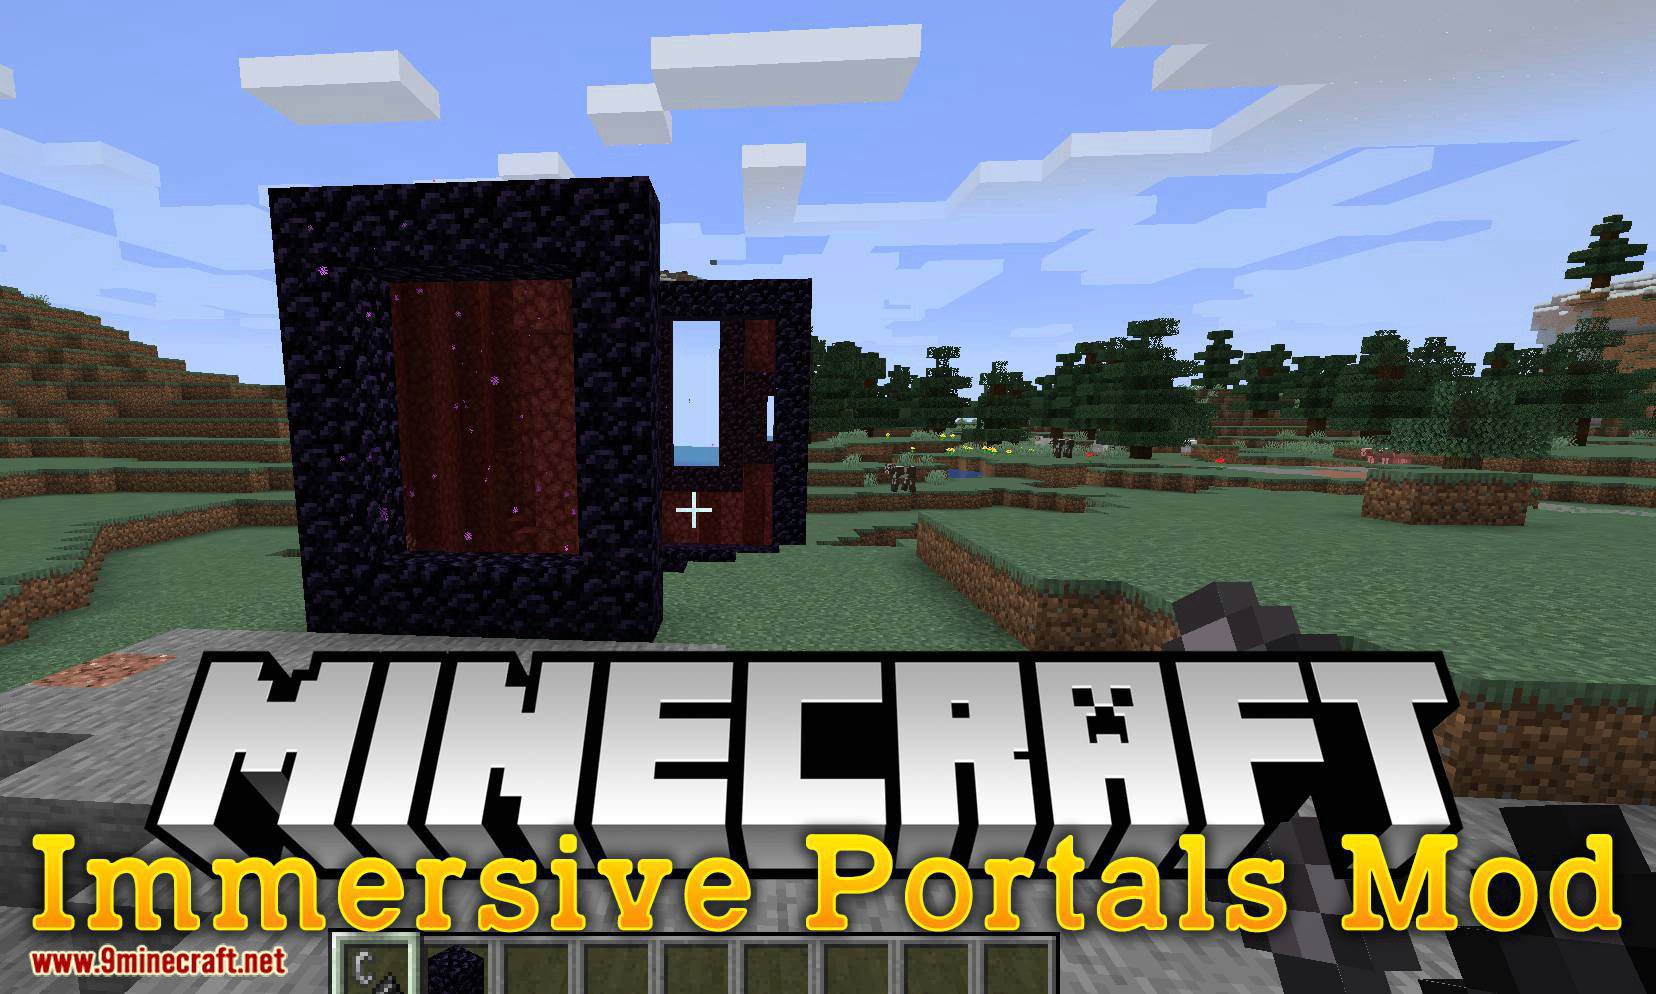 Immersive Portals Mod for minecraft logo